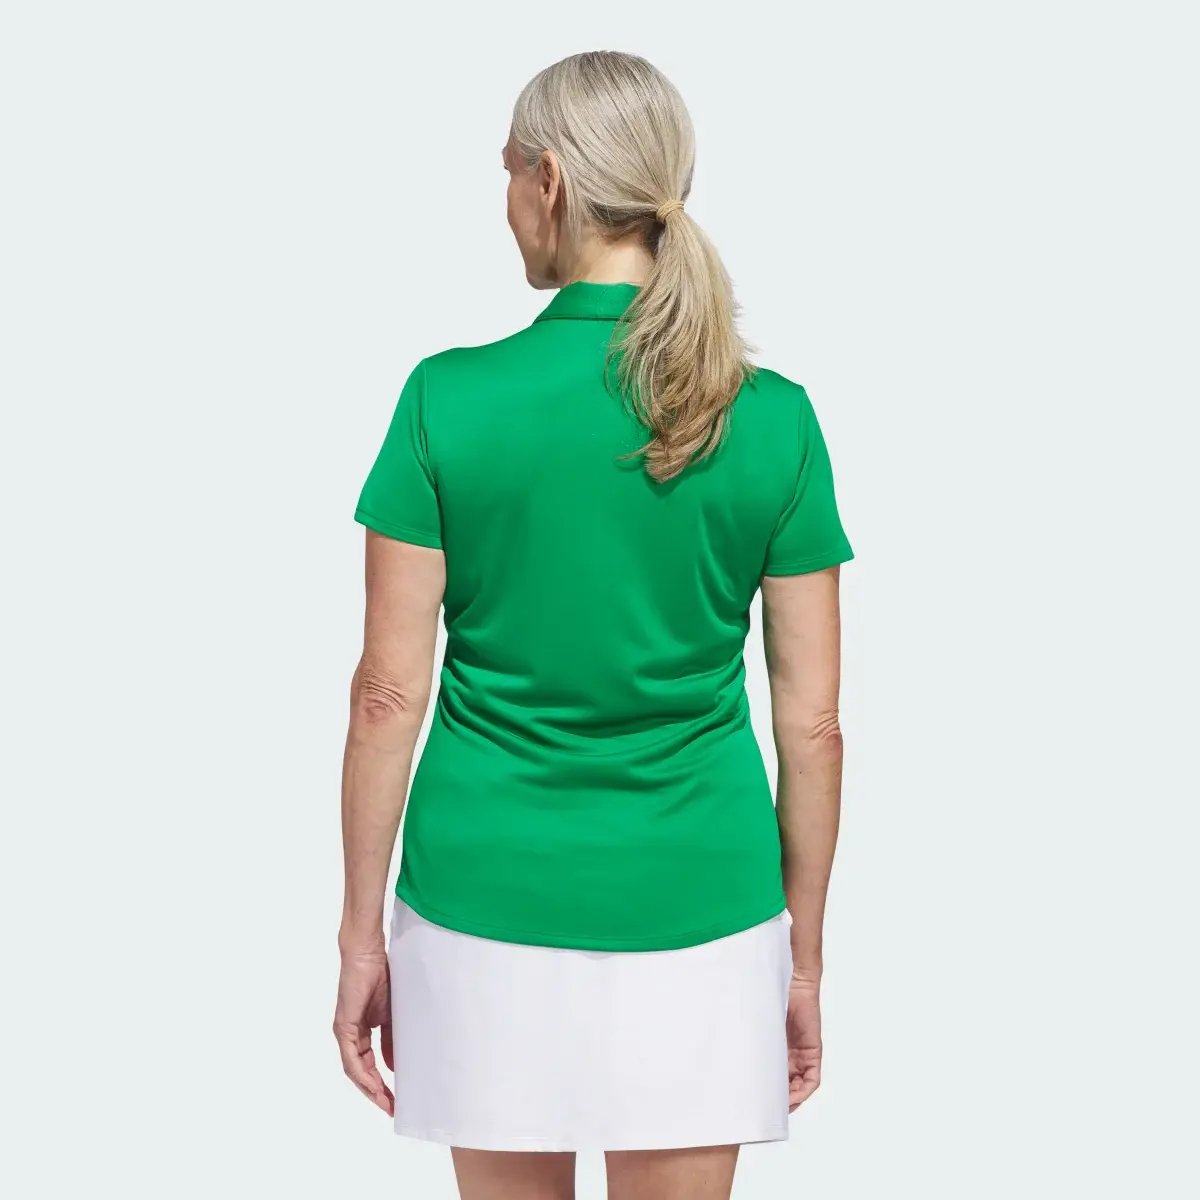 Adidas Women's Solid Performance Short Sleeve Polo Shirt. 3